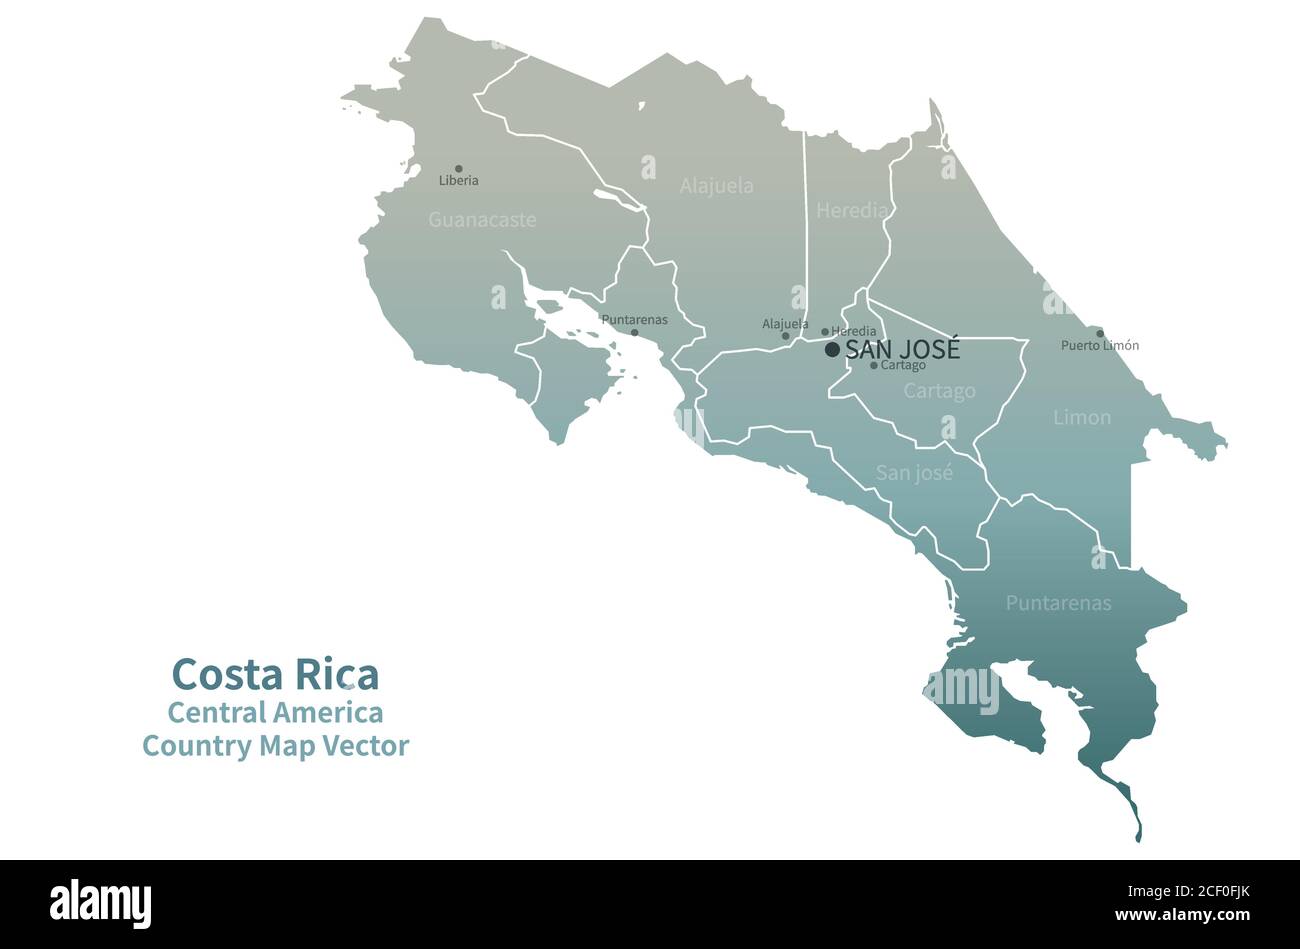 Costa Rica vector map. Country Map Green Series. Stock Vector